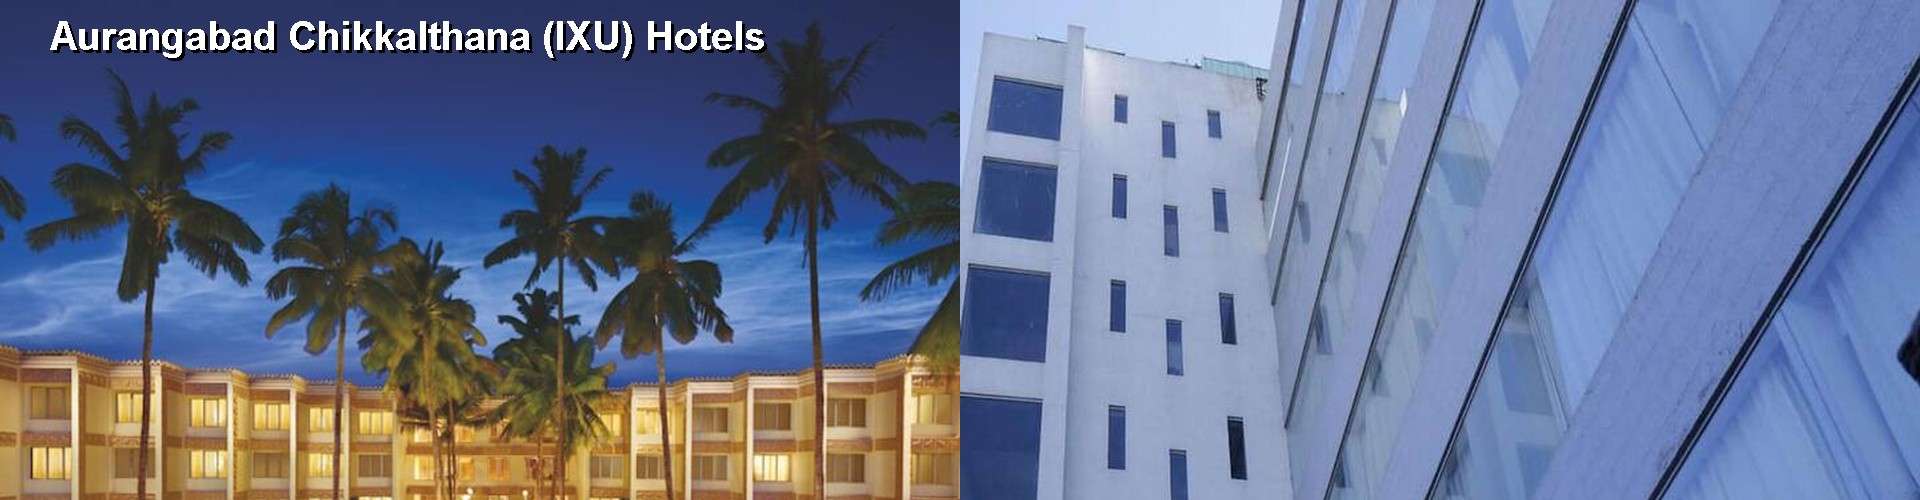 5 Best Hotels near Aurangabad Chikkalthana (IXU)